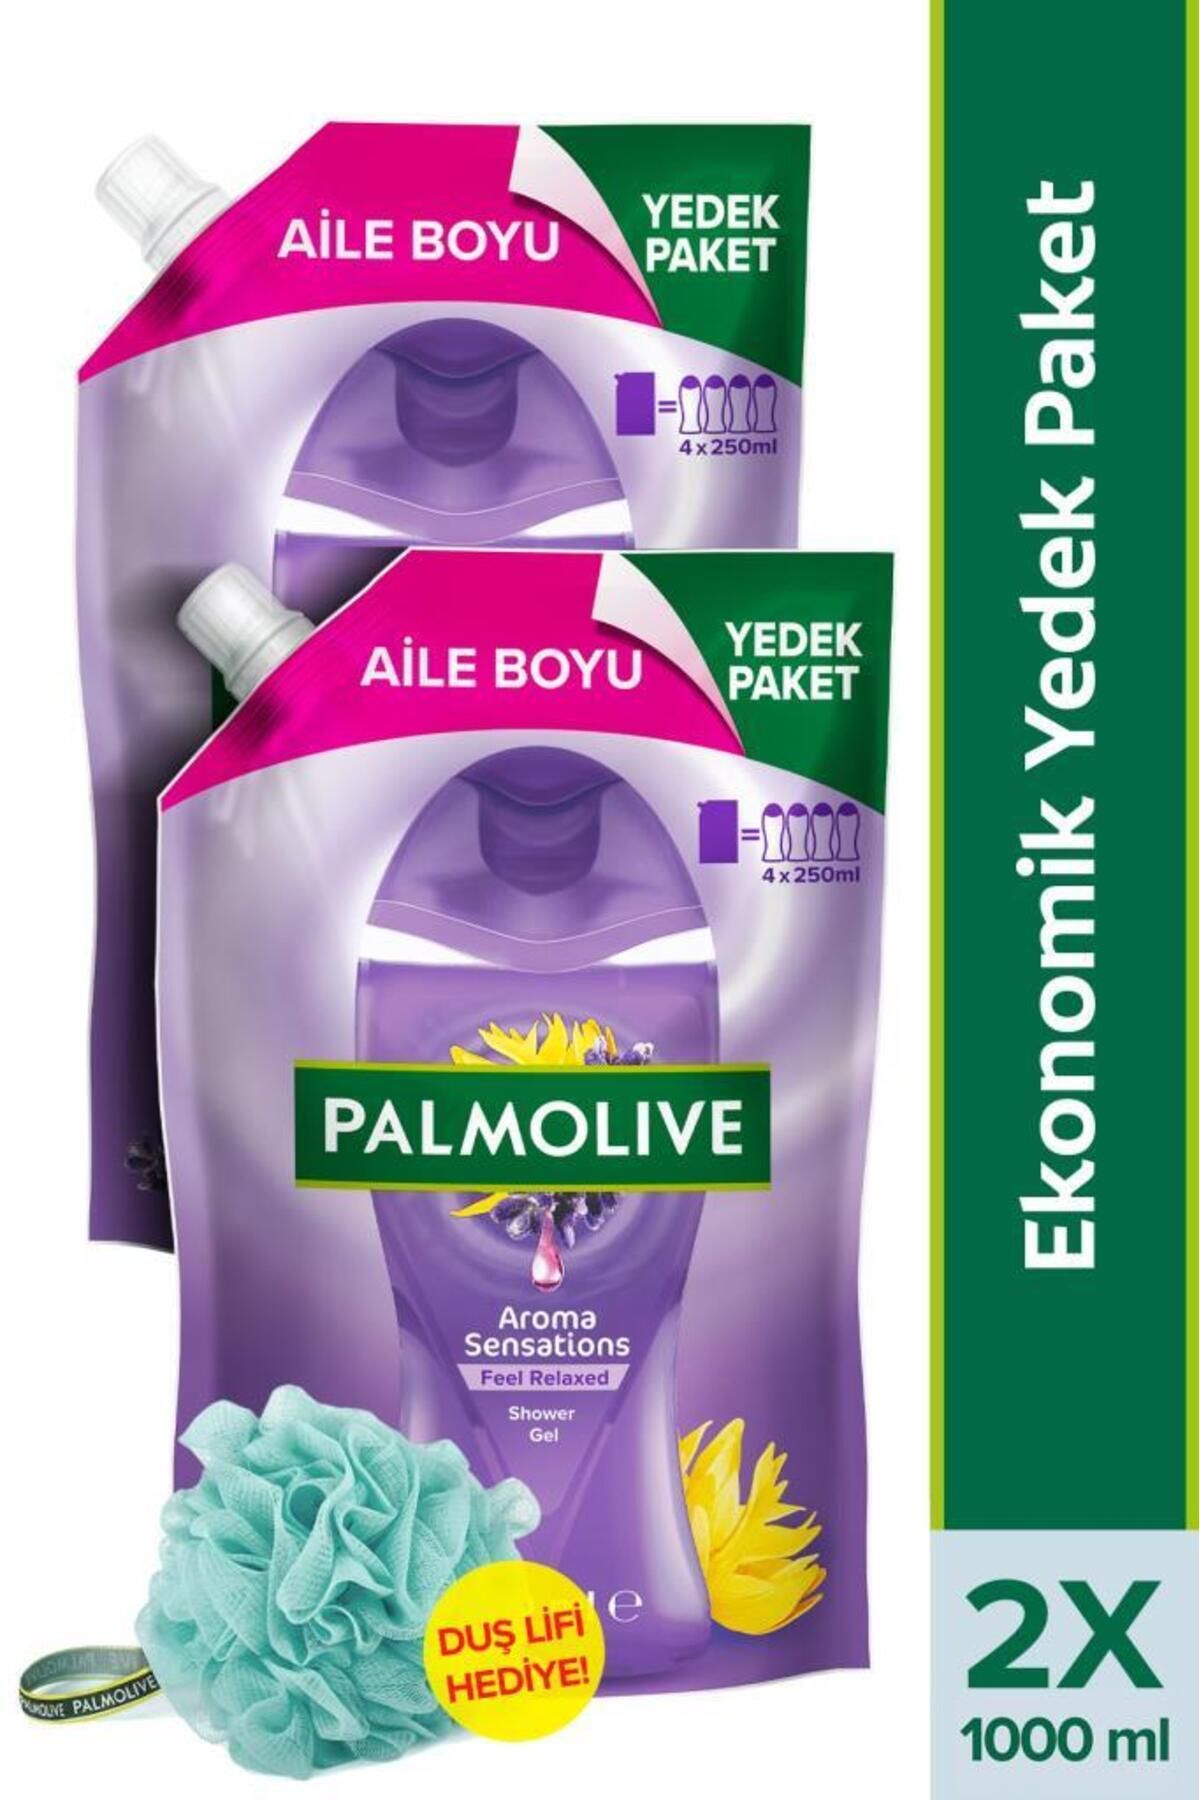 Palmolive Aroma Sensations Feel Relaxed Aile Boyu Yedek Paket Duş Jeli 1000 ml x2 + Duş Lifi Hediye